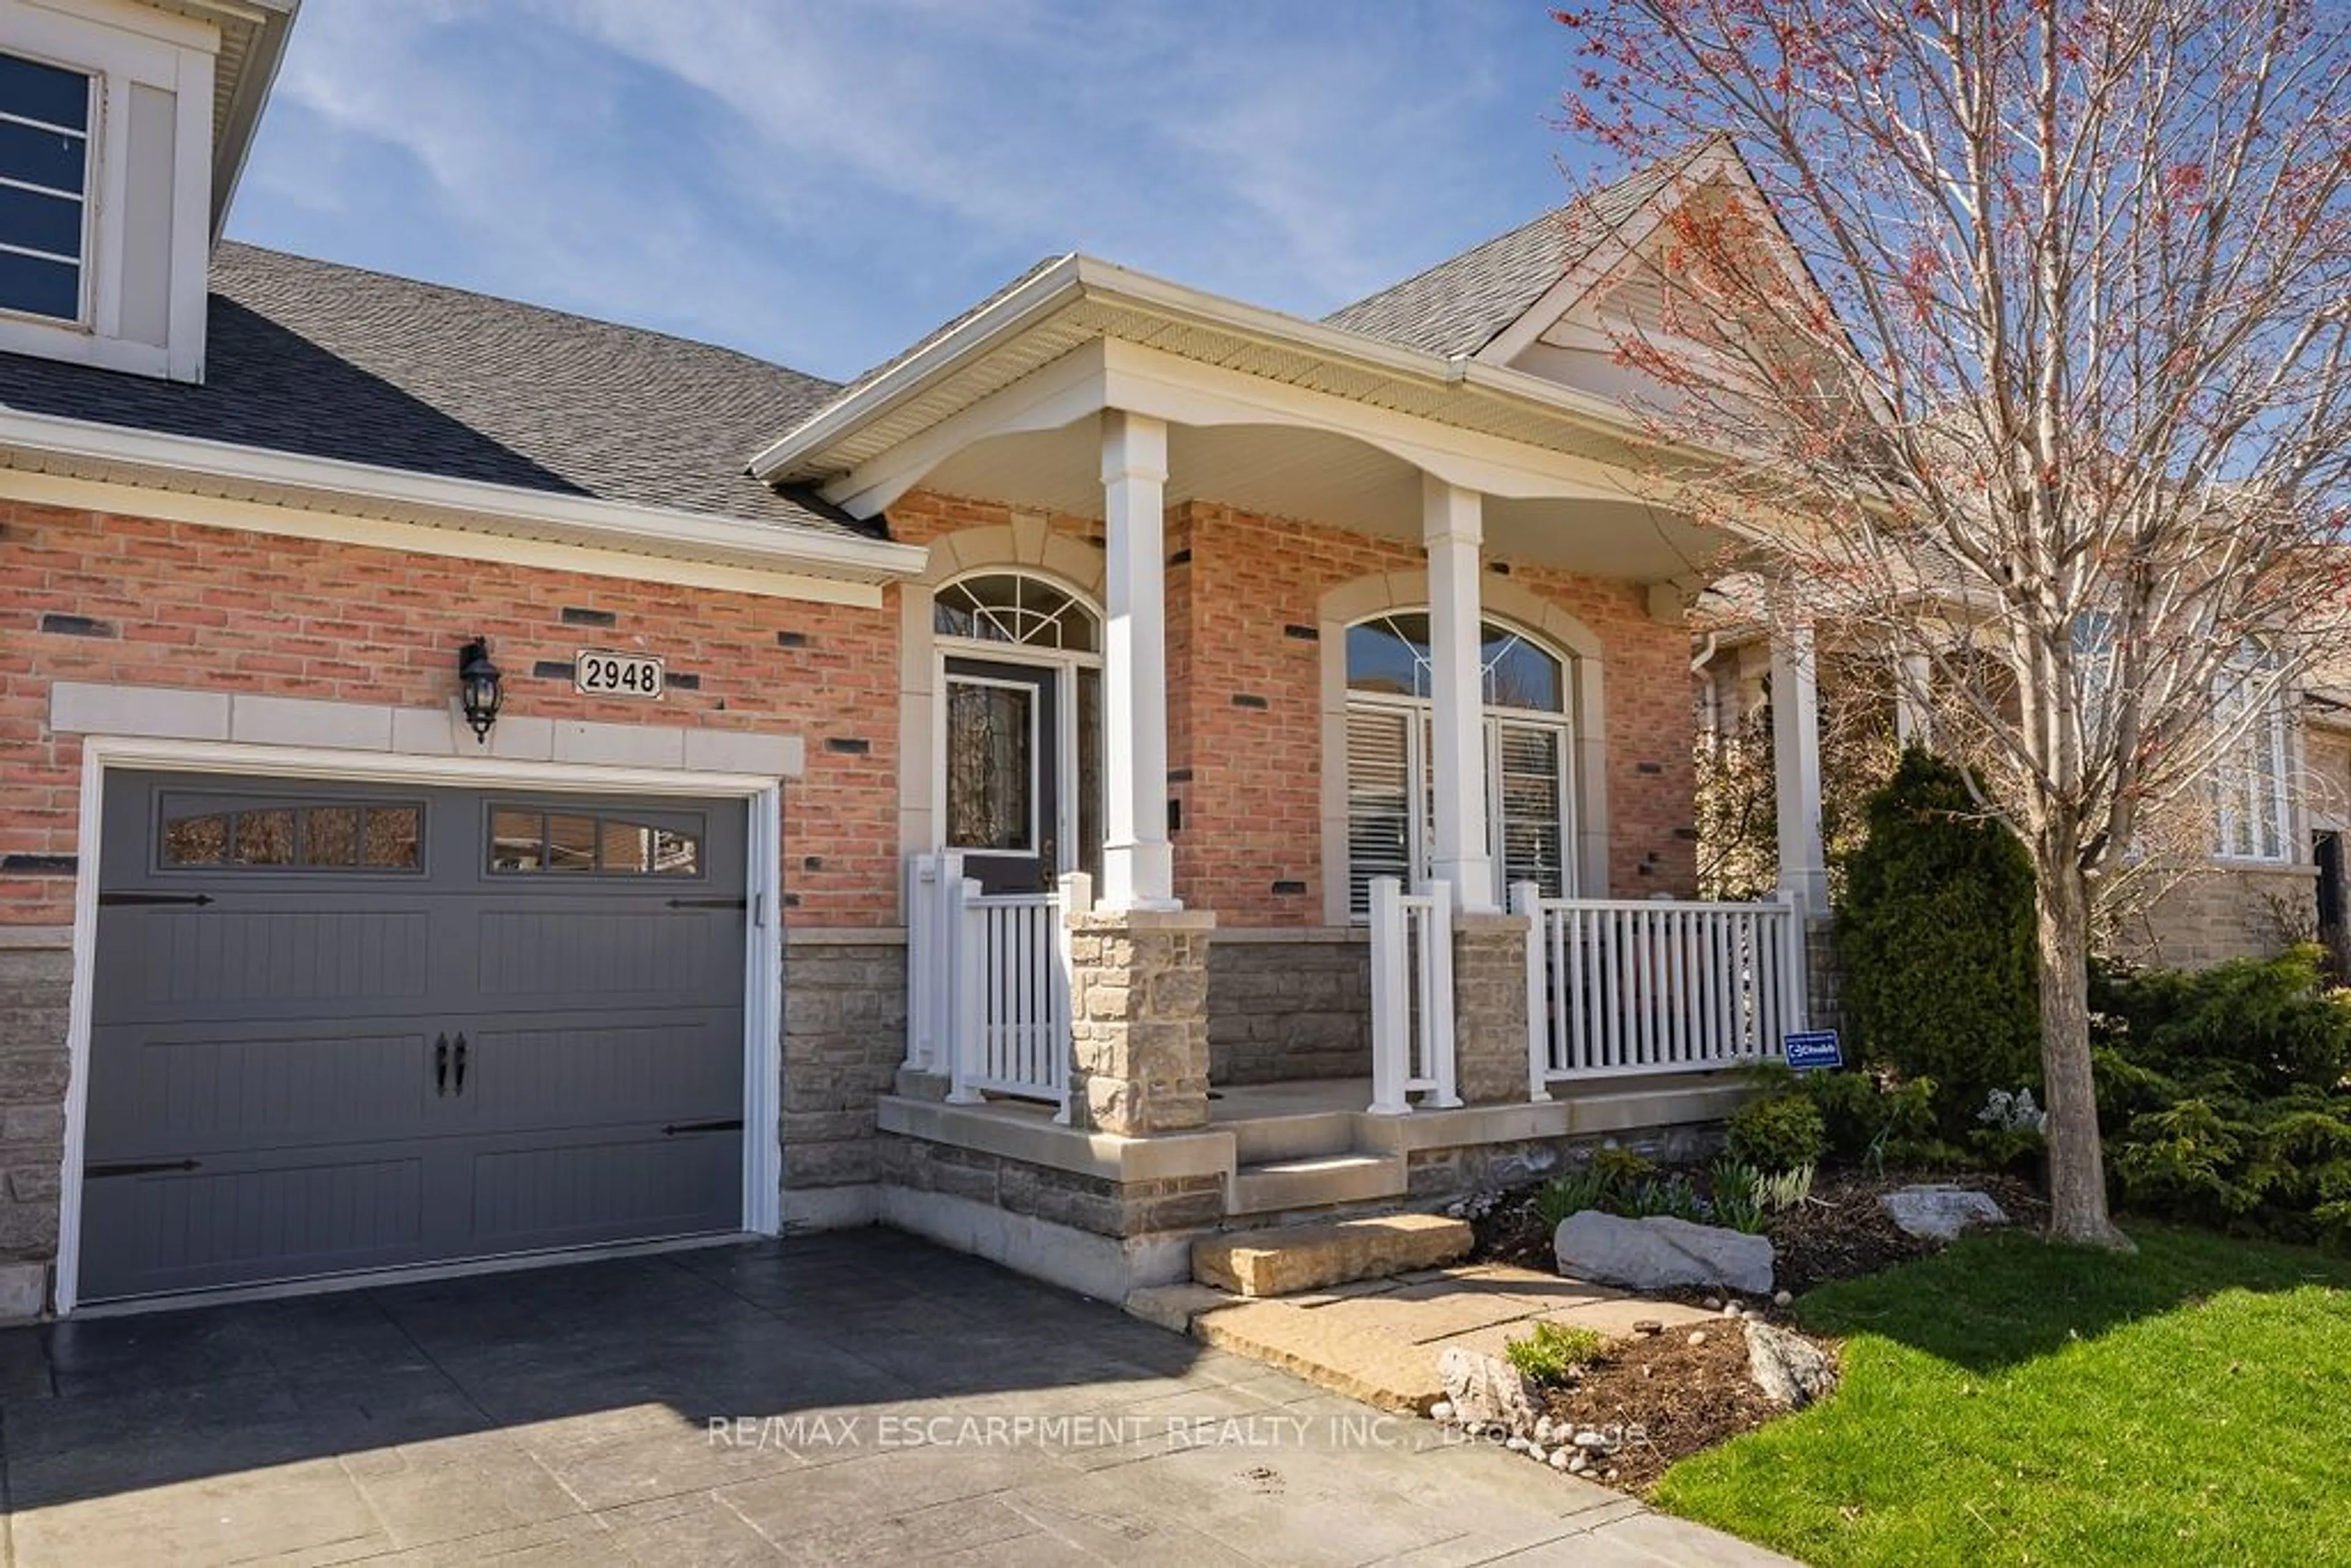 Home with brick exterior material for 2948 Singleton Common, Burlington Ontario L7M 0B4